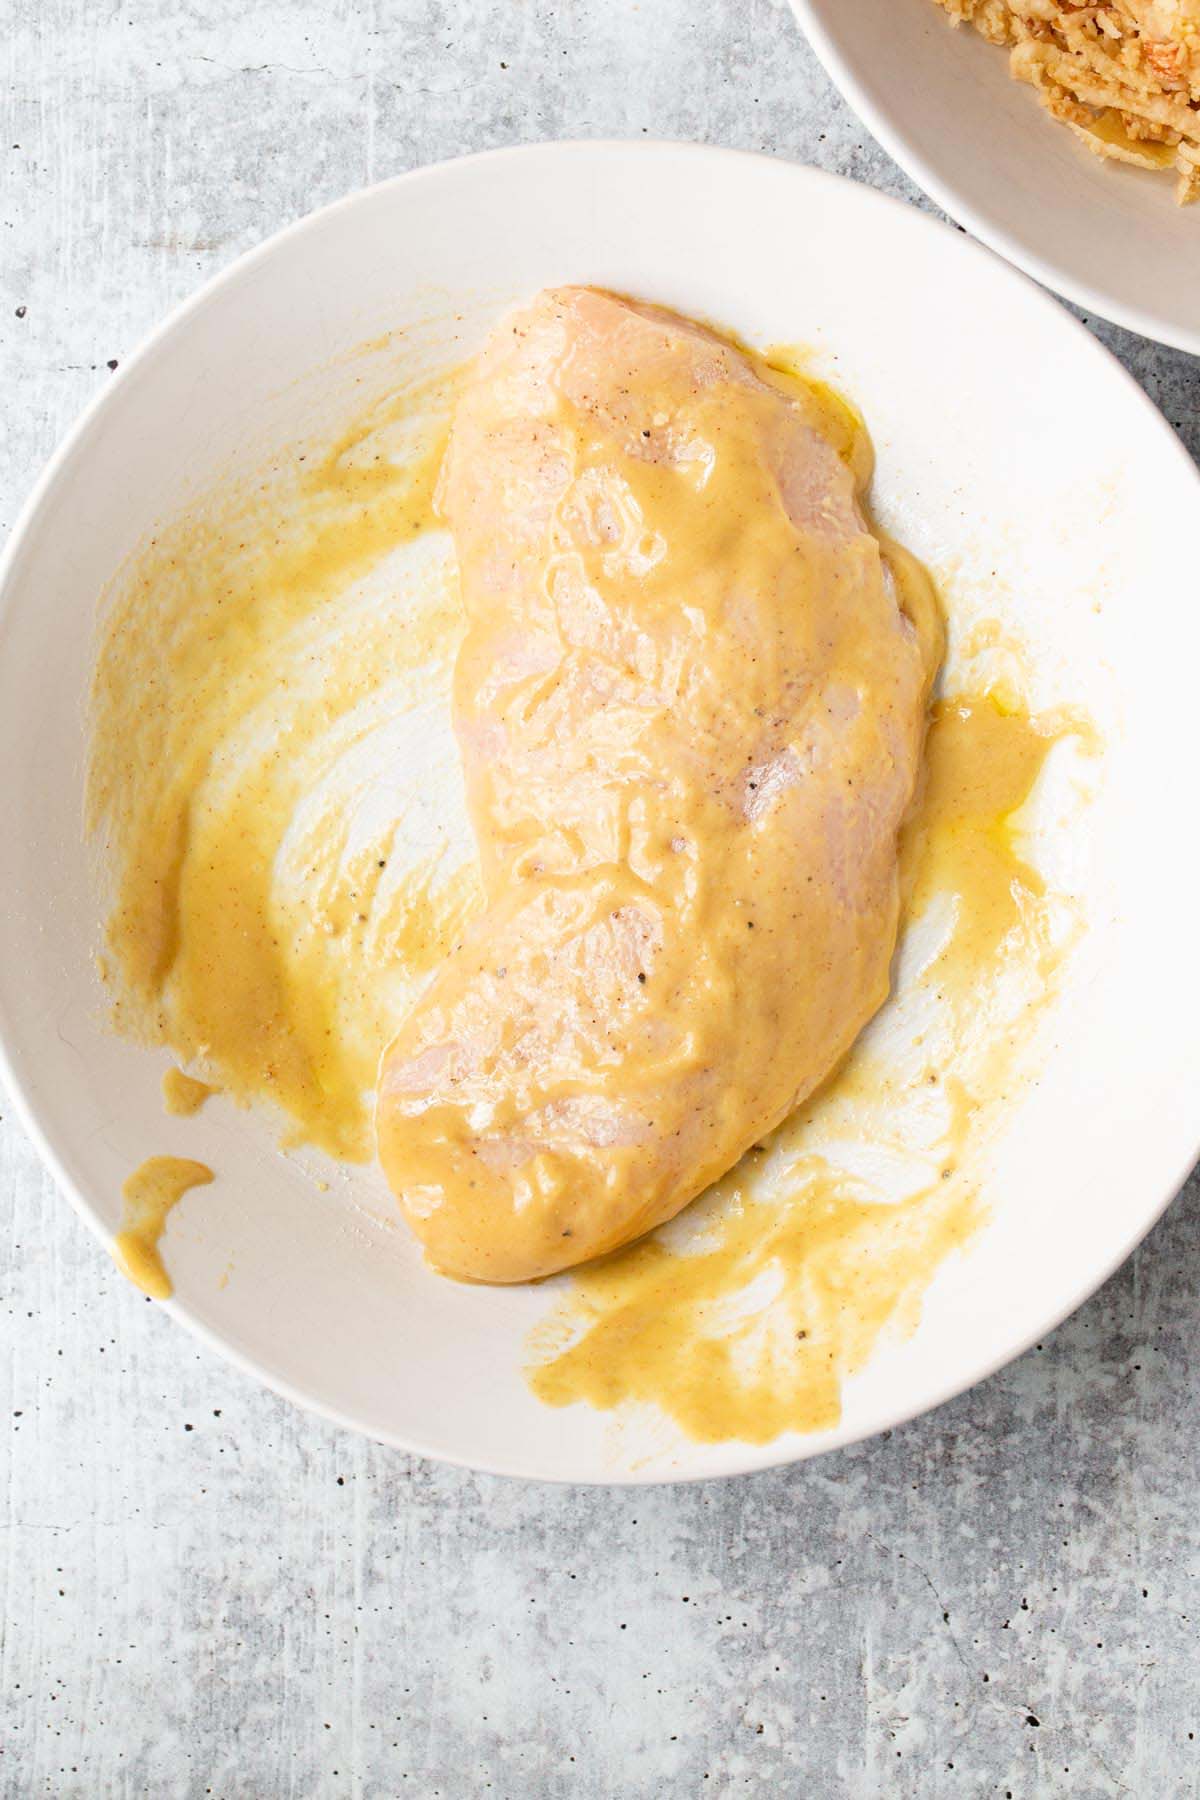 Dipping chicken in honey mustard sauce.